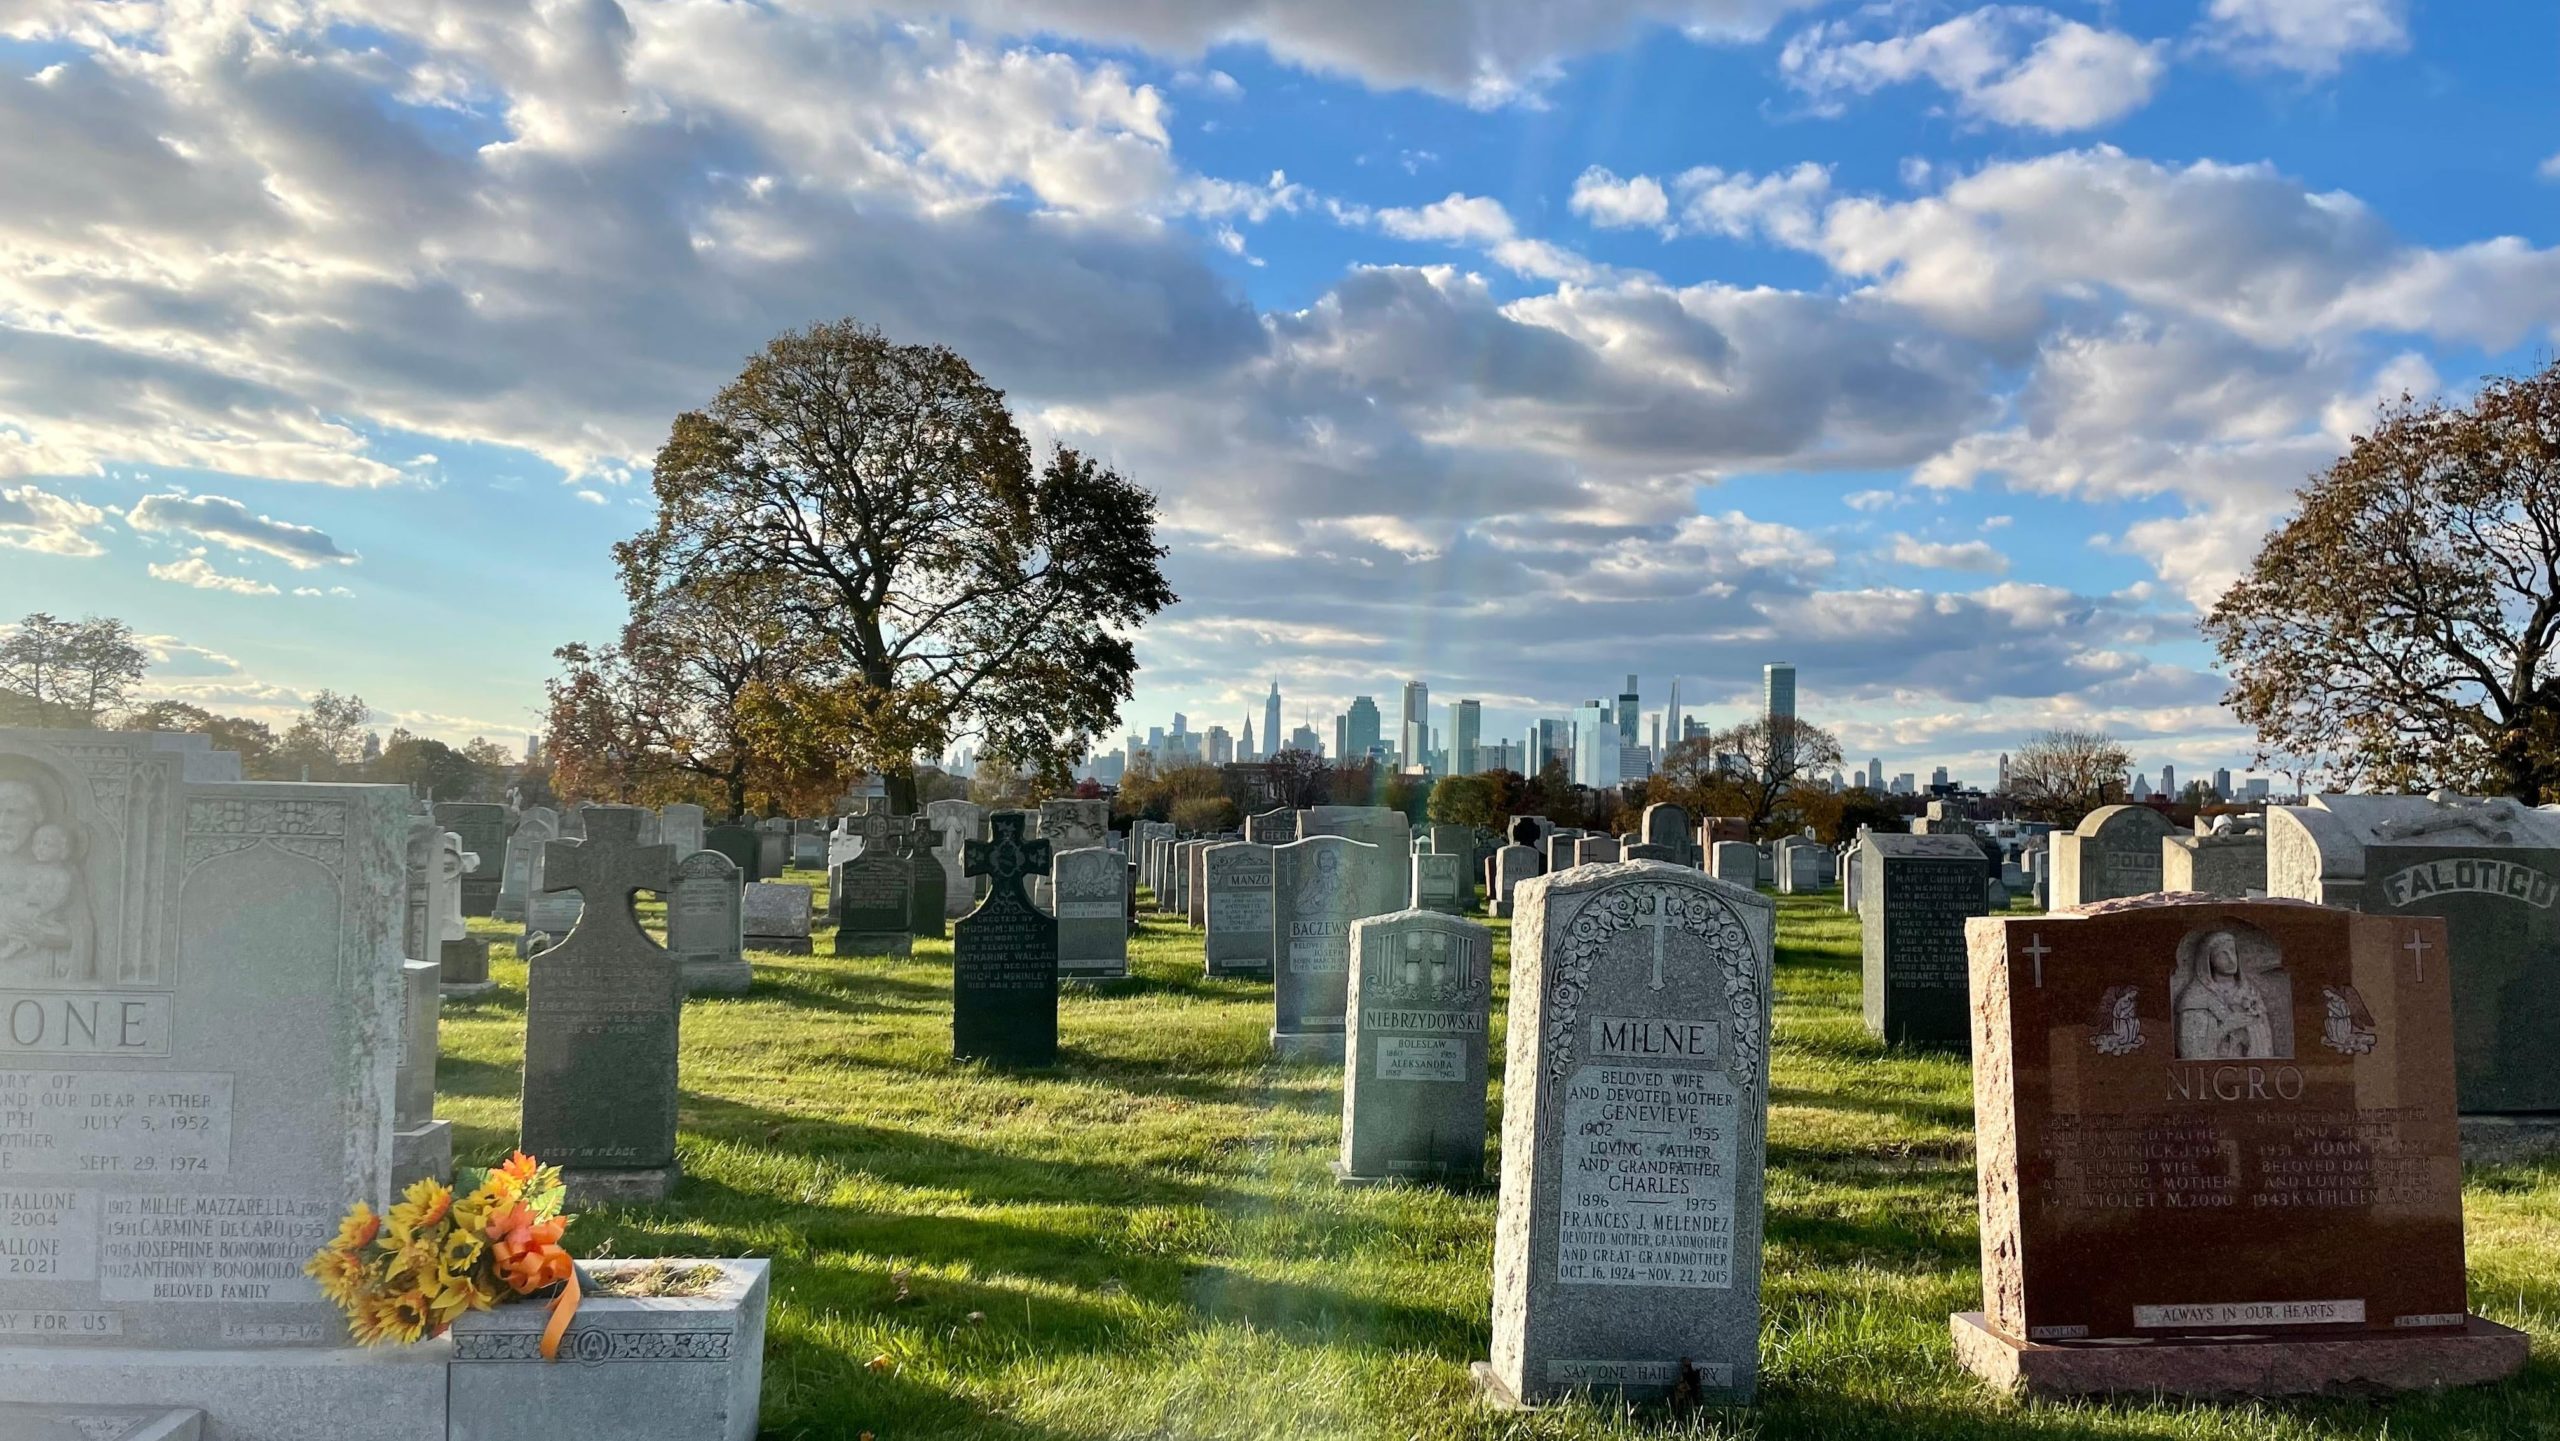 Is It OK to Run in Cemeteries?